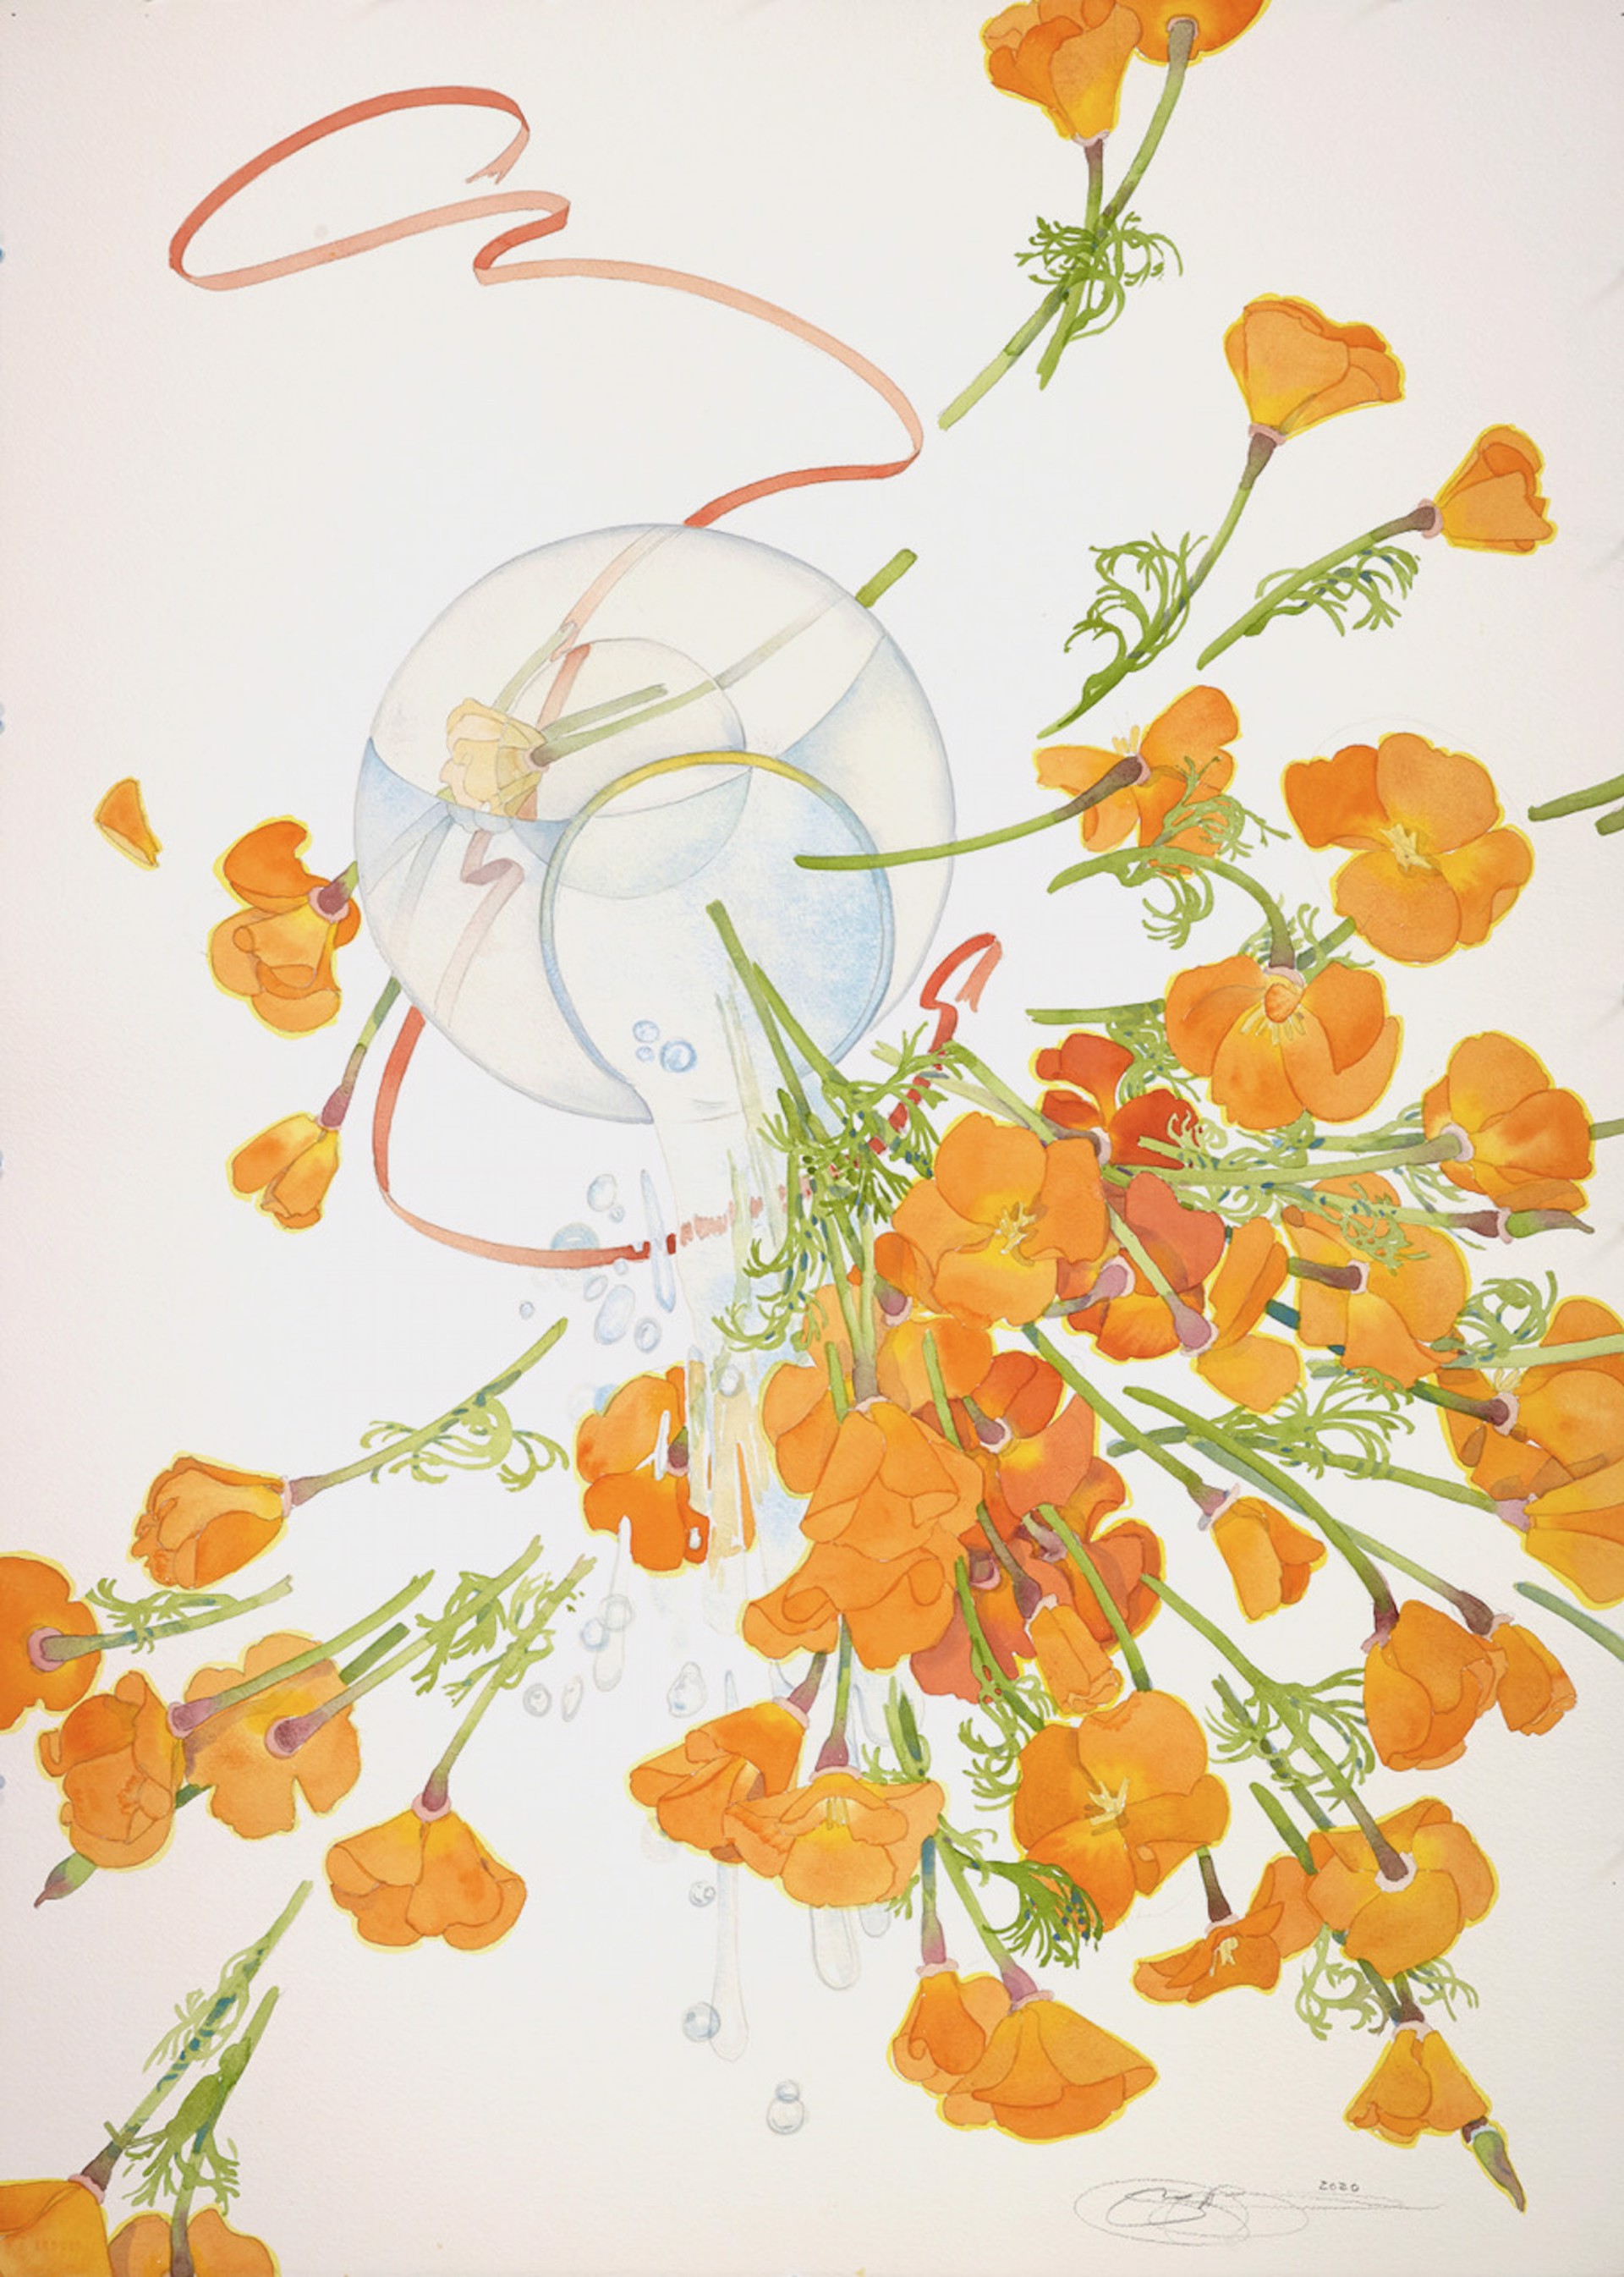 Leaping Poppies by Gary Bukovnik